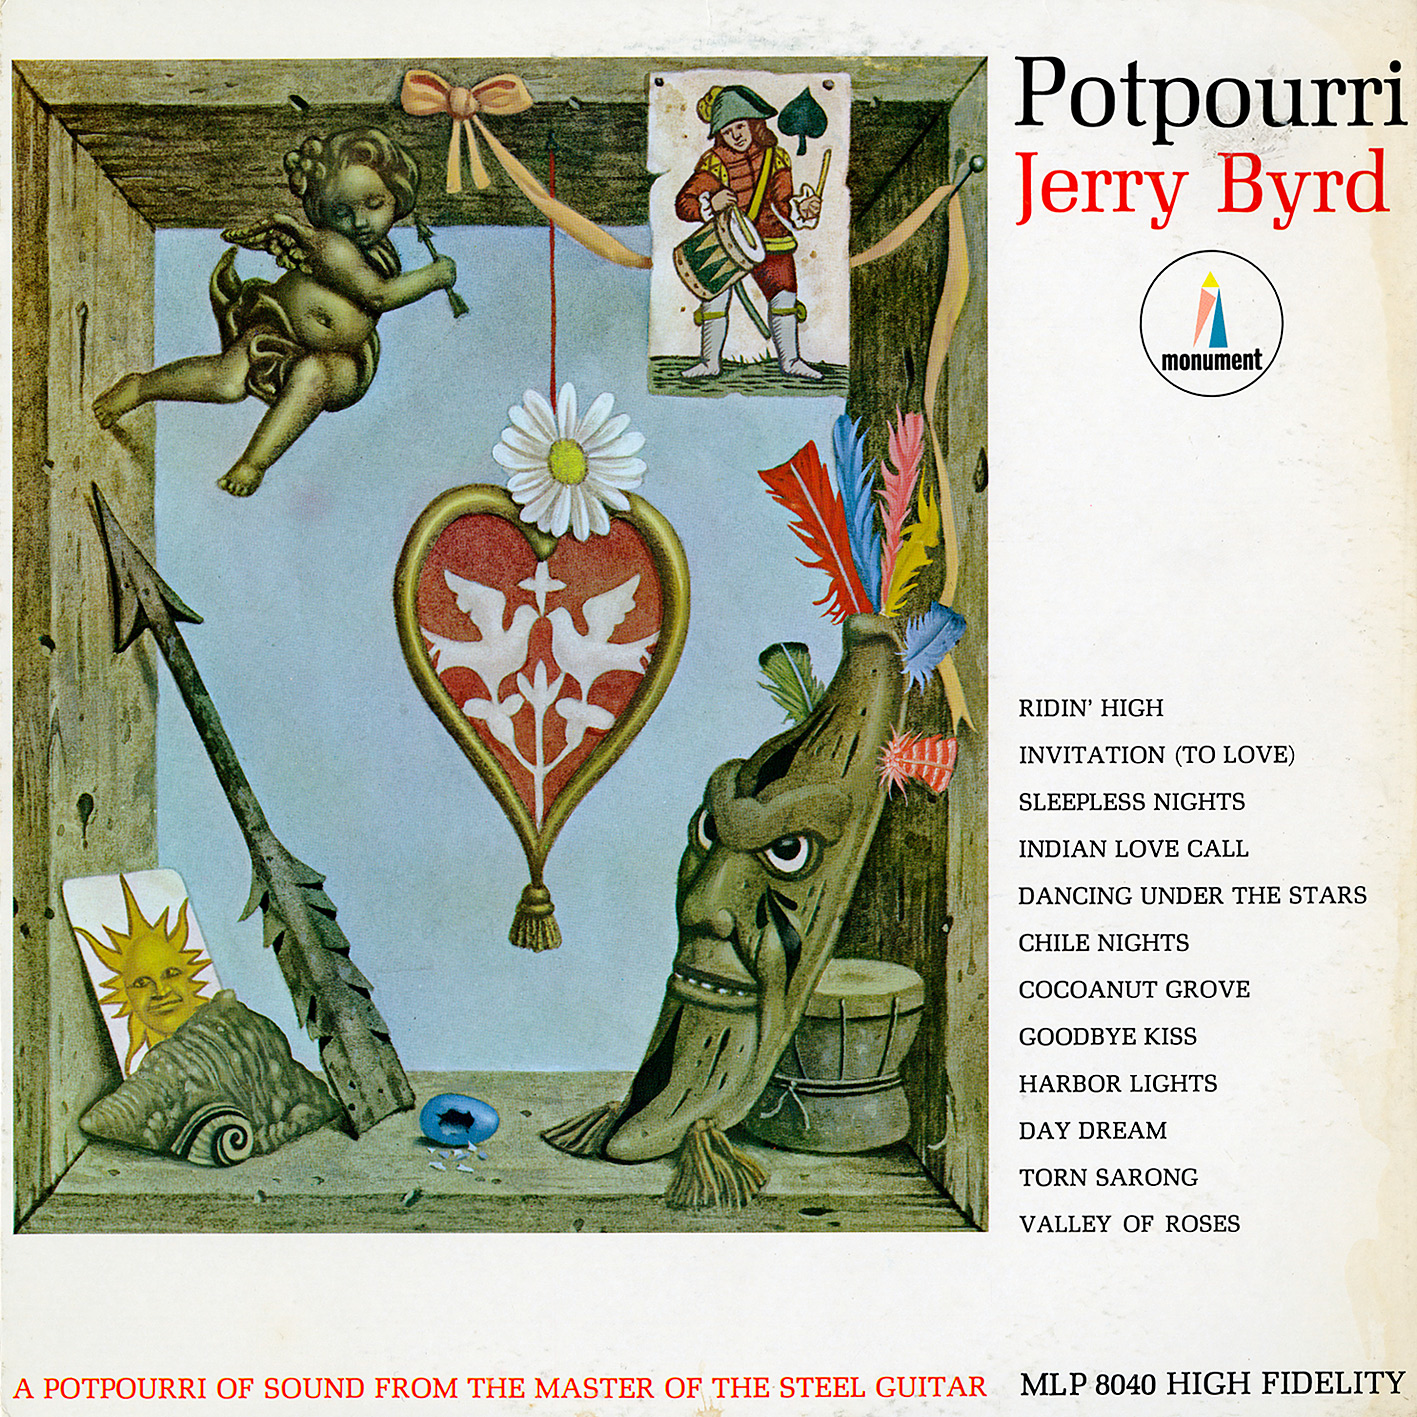 Jerry Byrd - Potpourri (1966/2016) [HDTracks FLAC 24bit/192kHz]